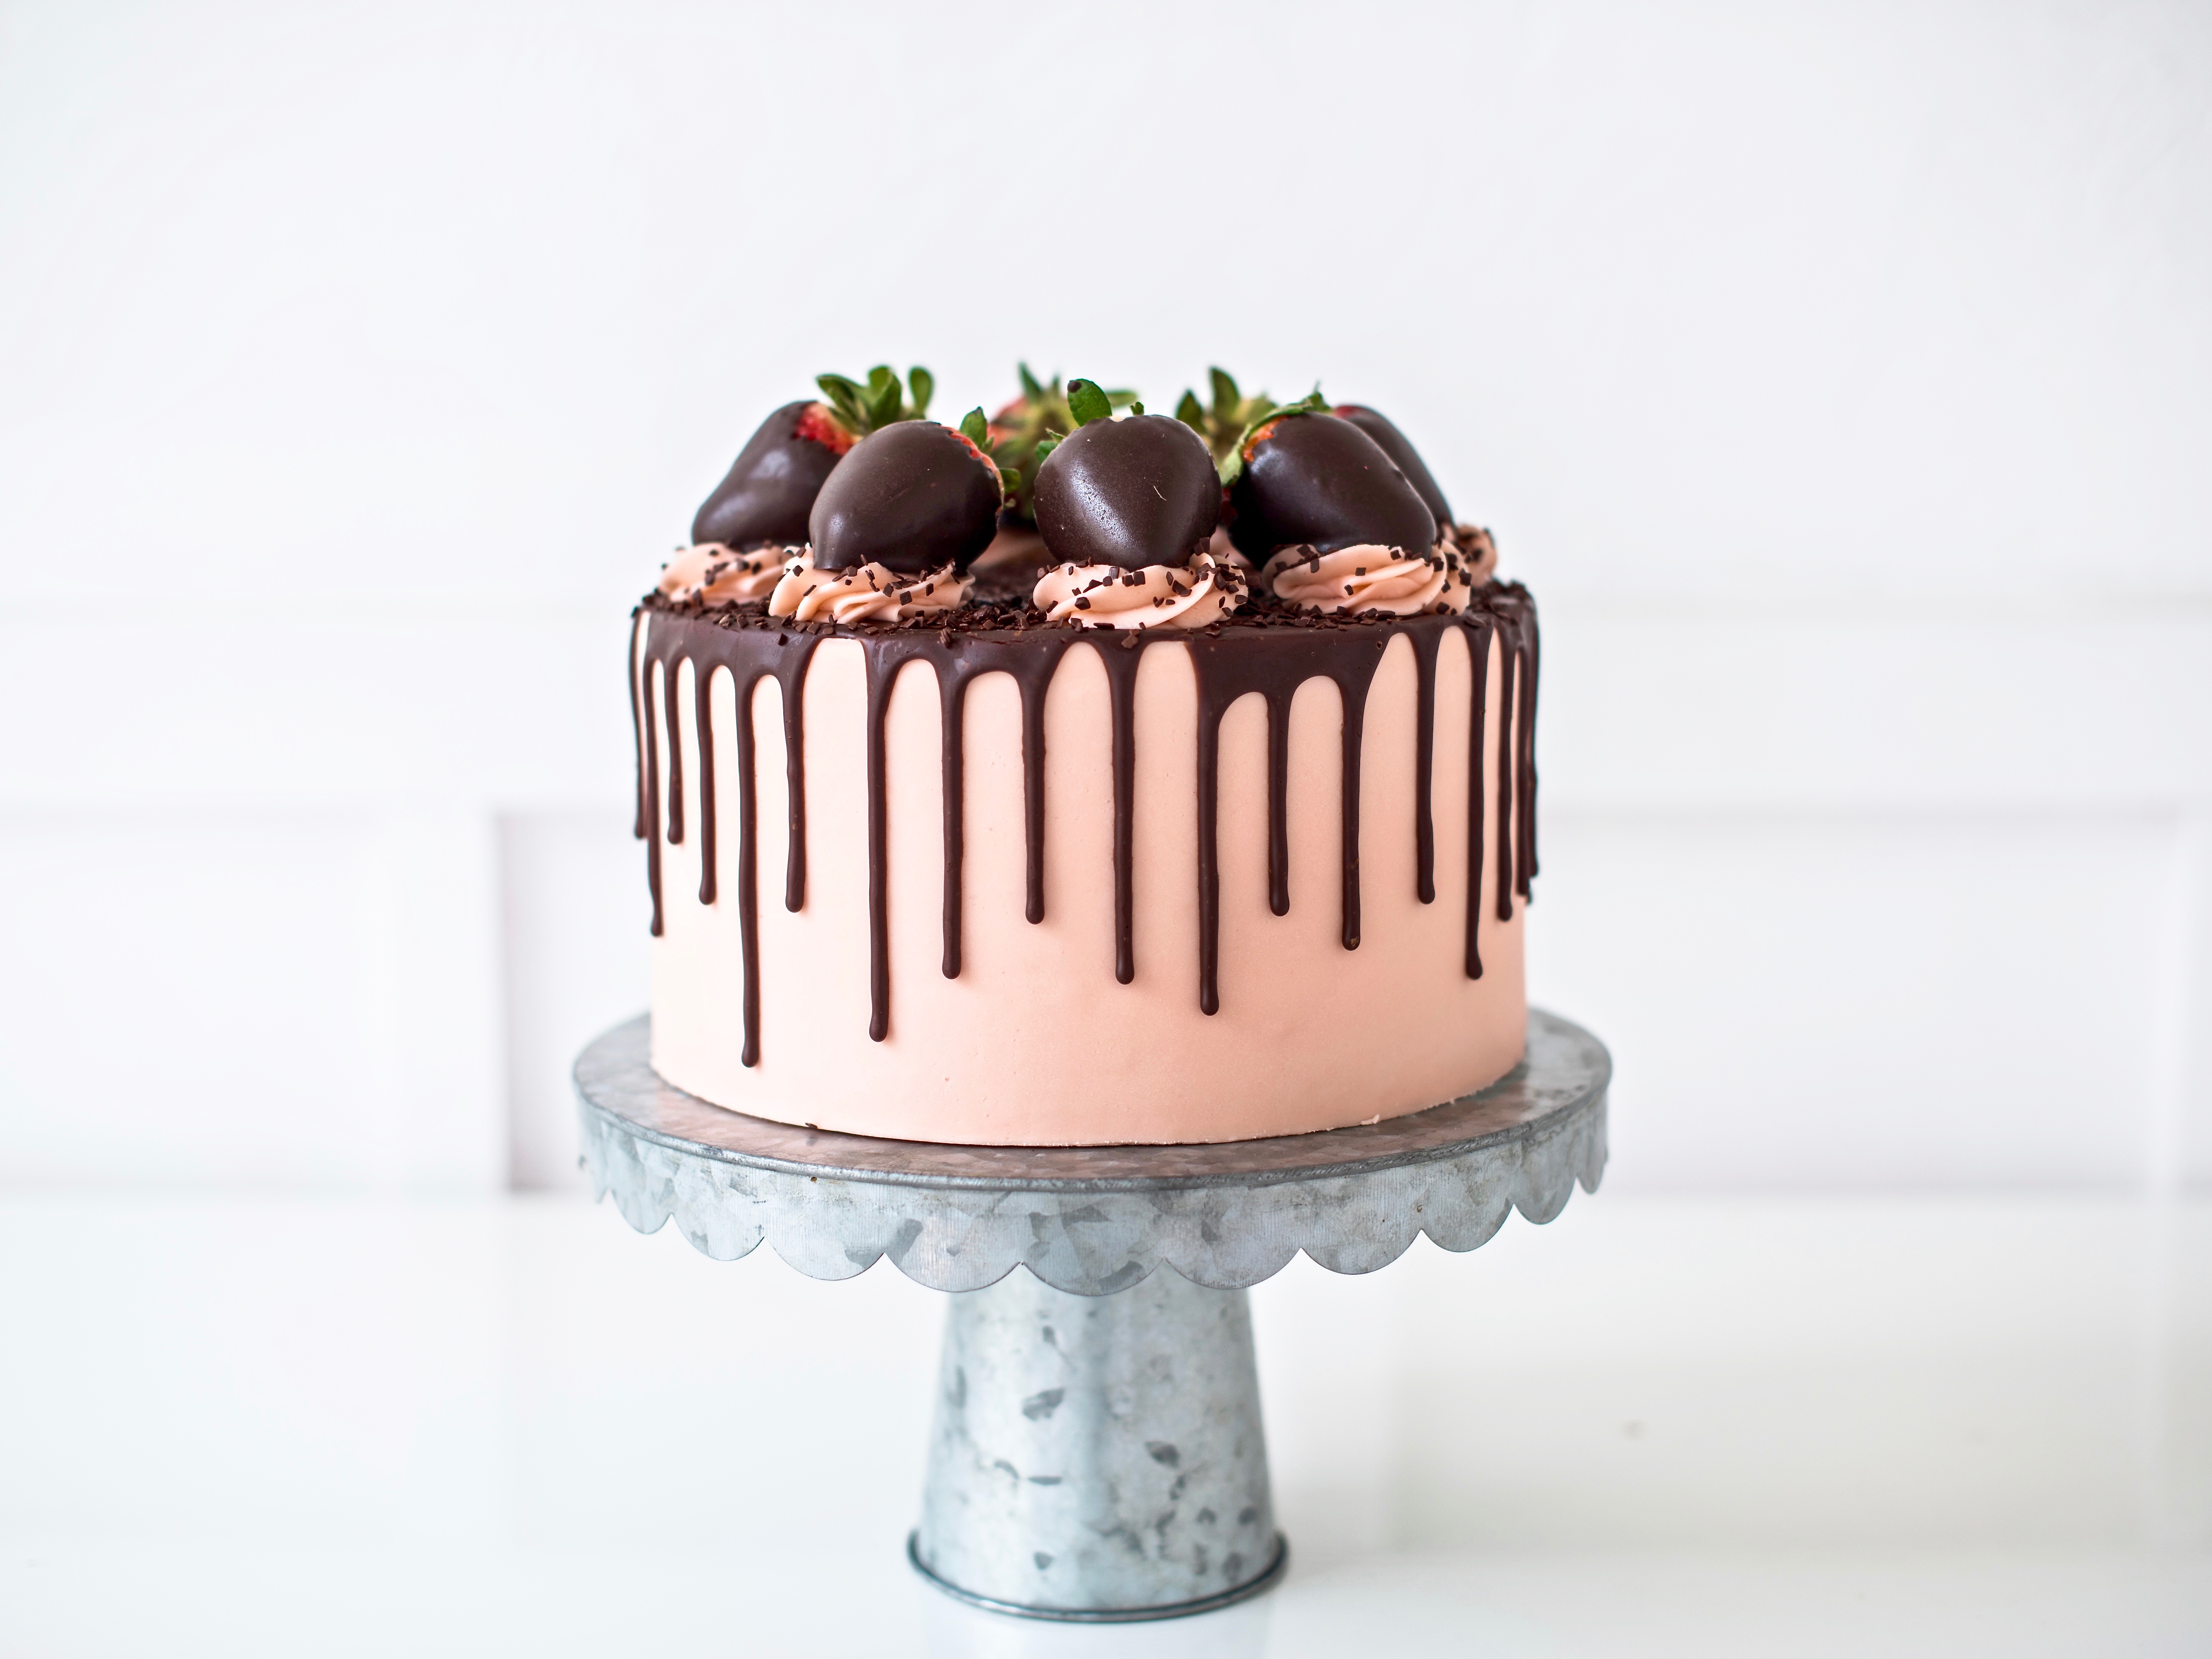 strawberry chocolate cake recipe for beginner's. www.cakebycourtney.com